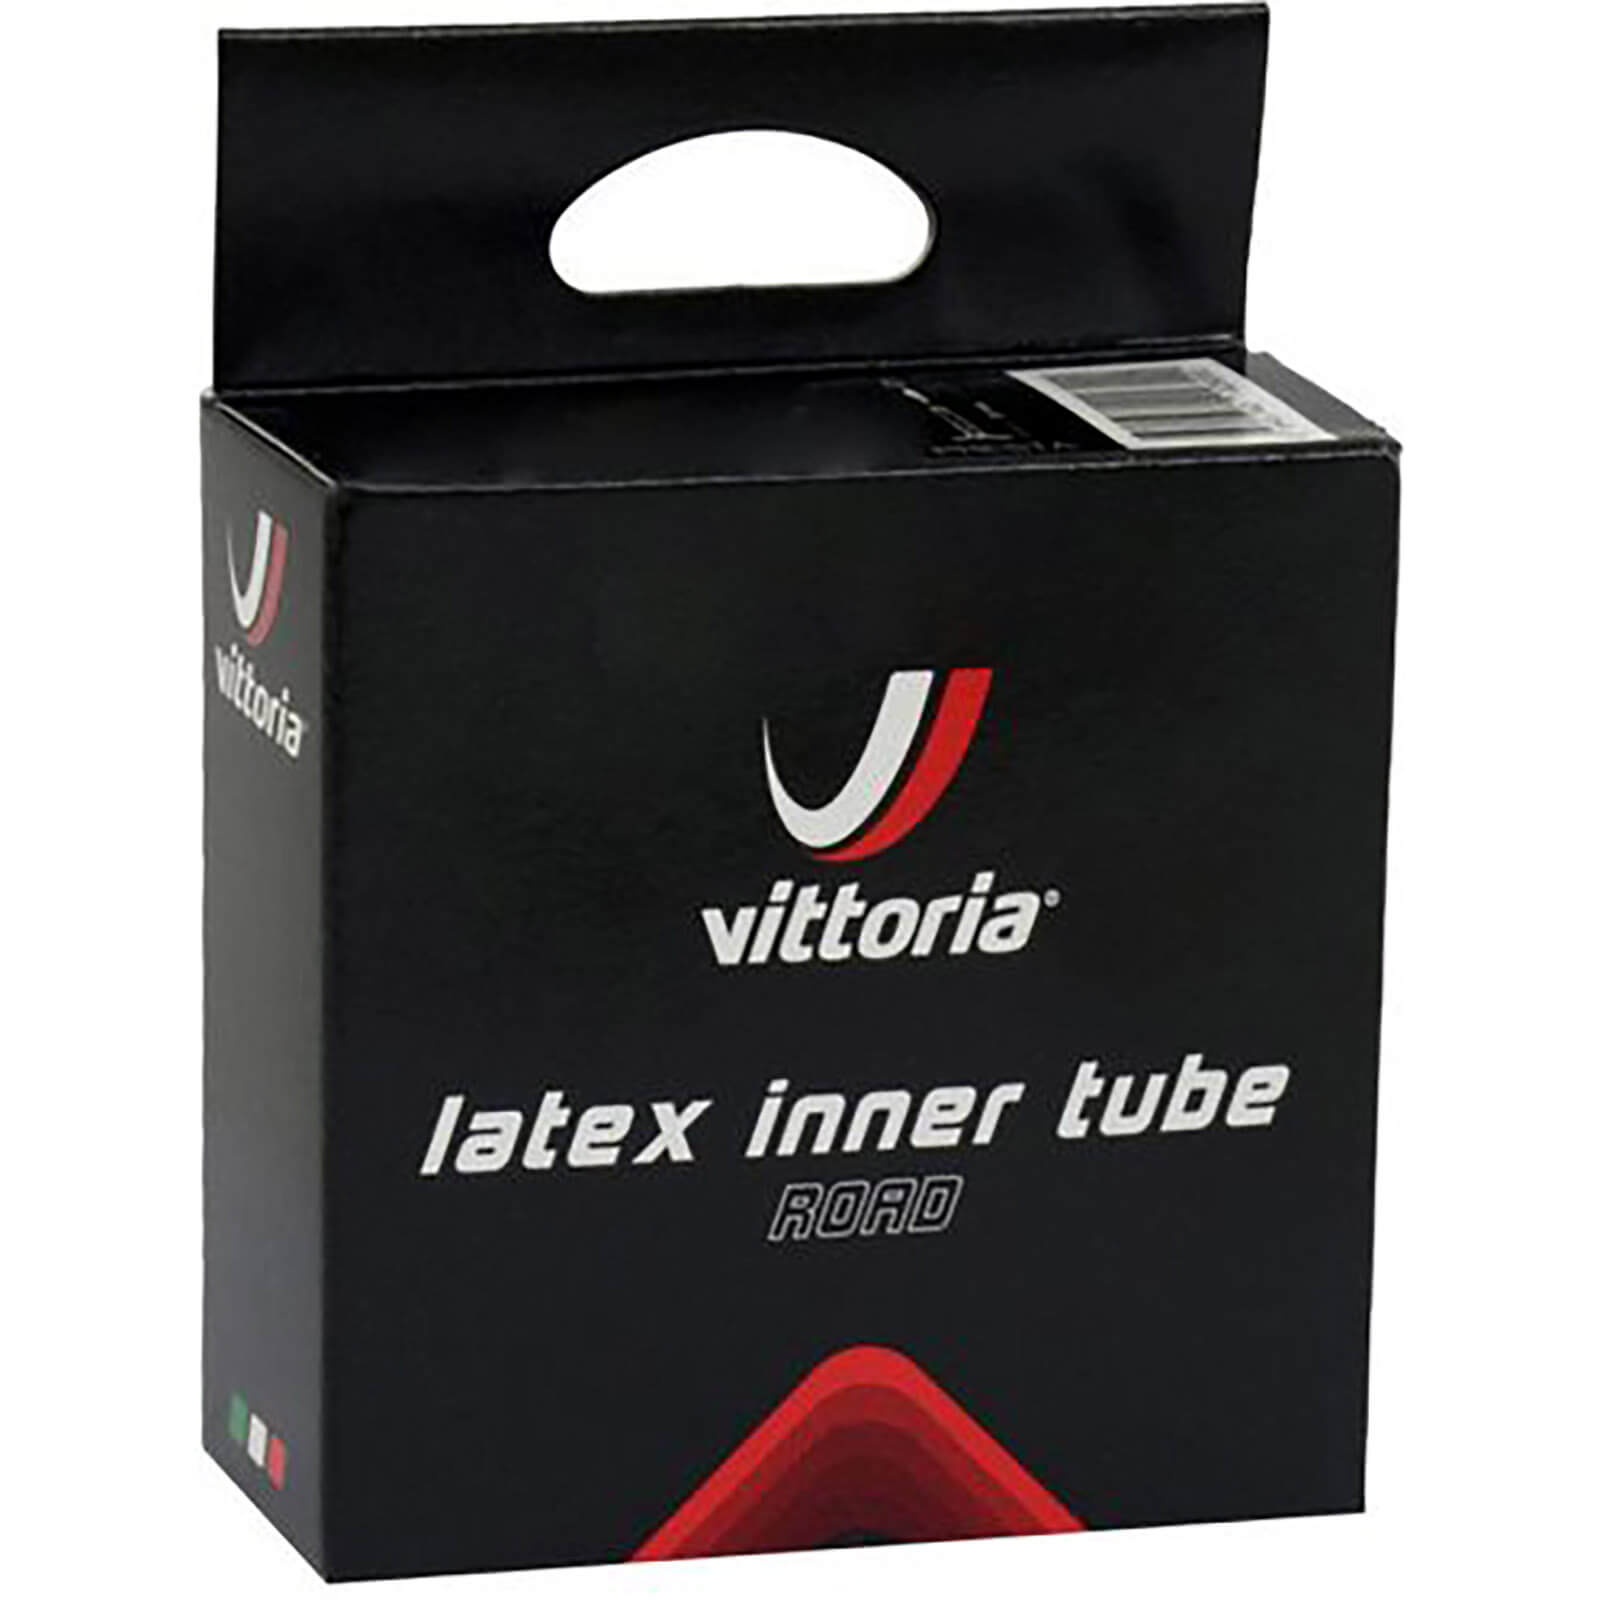 Vittoria Competition Latex Innertube - 700x19/23mm